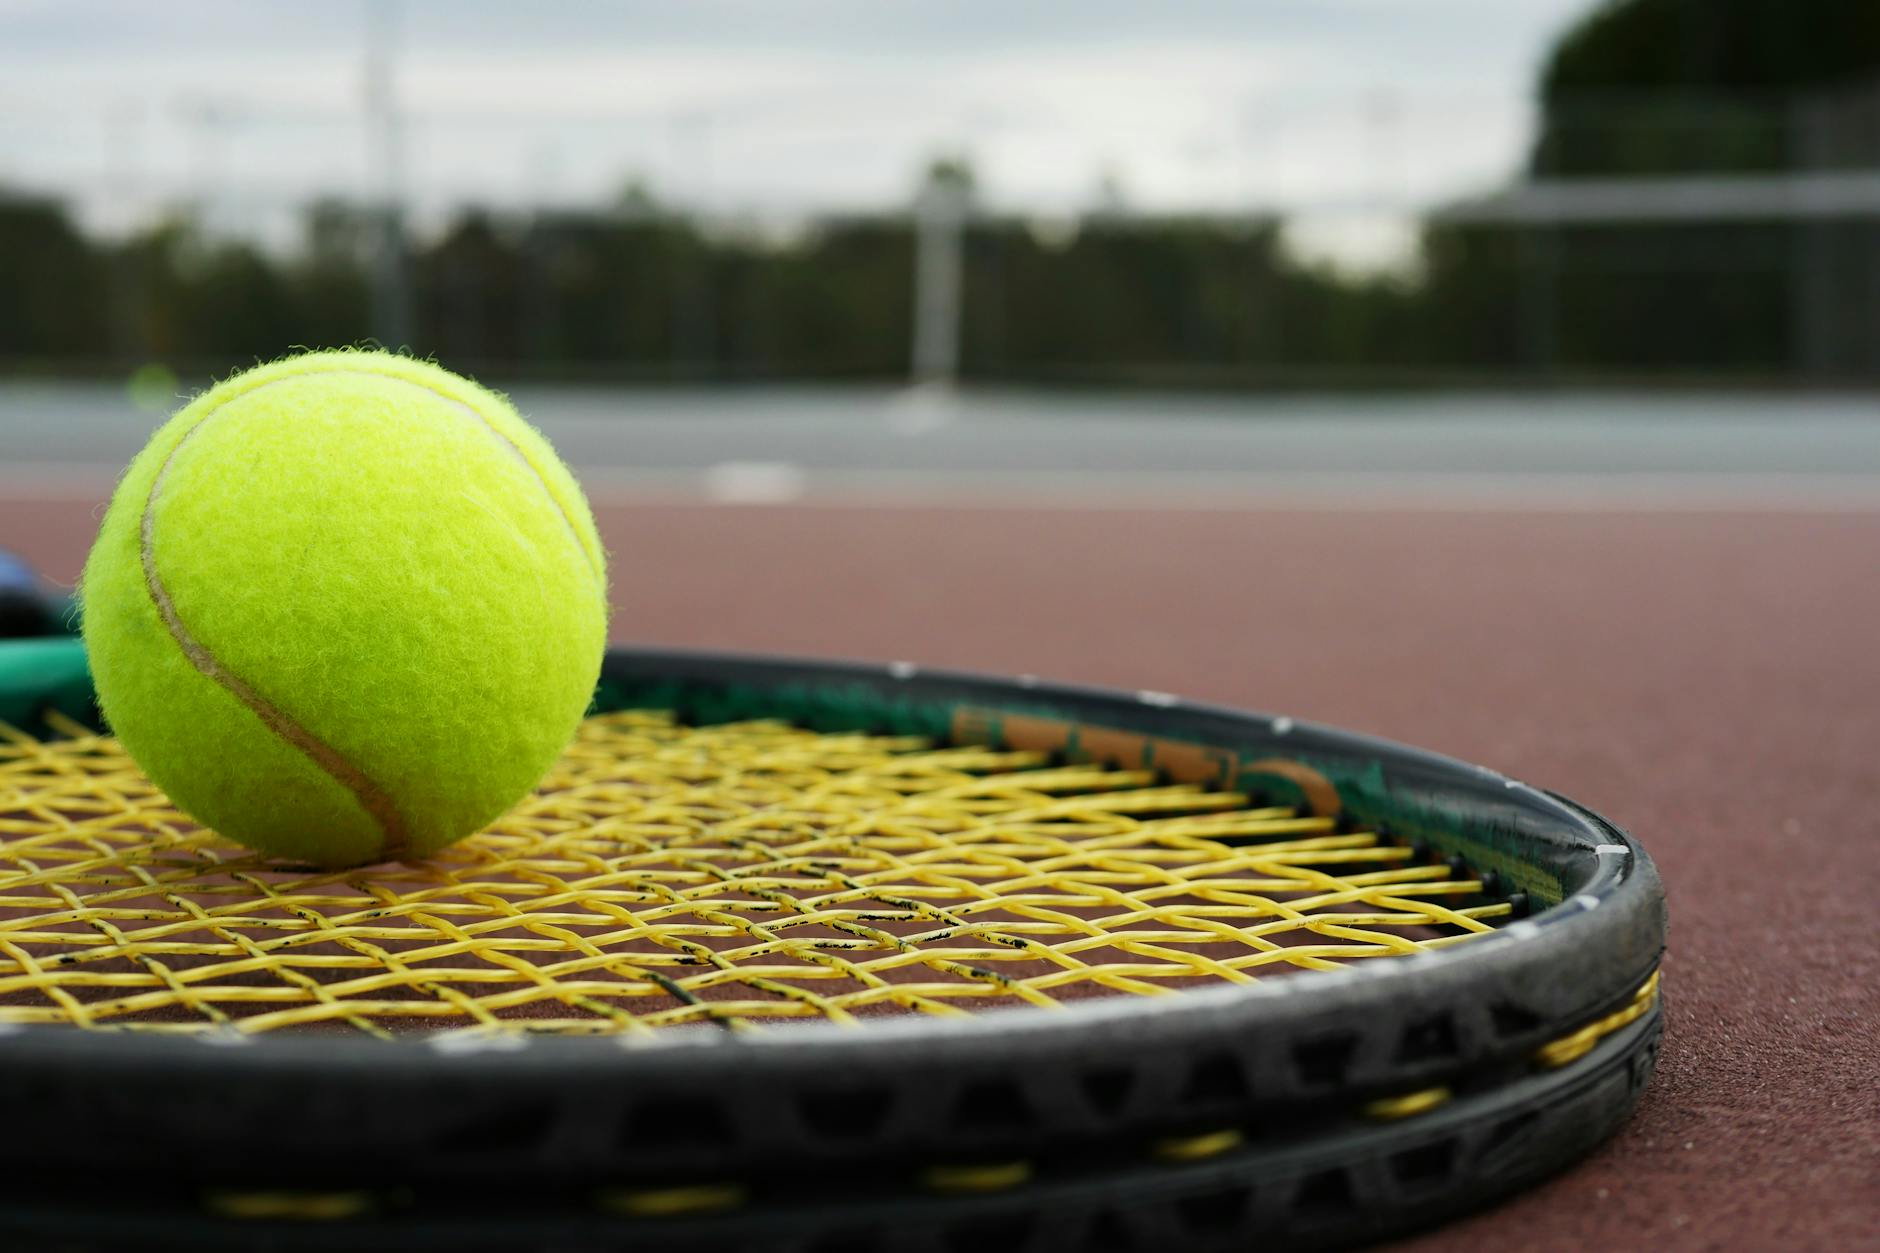 Green Tennis Ball on Tennis Court · Free Stock Photo